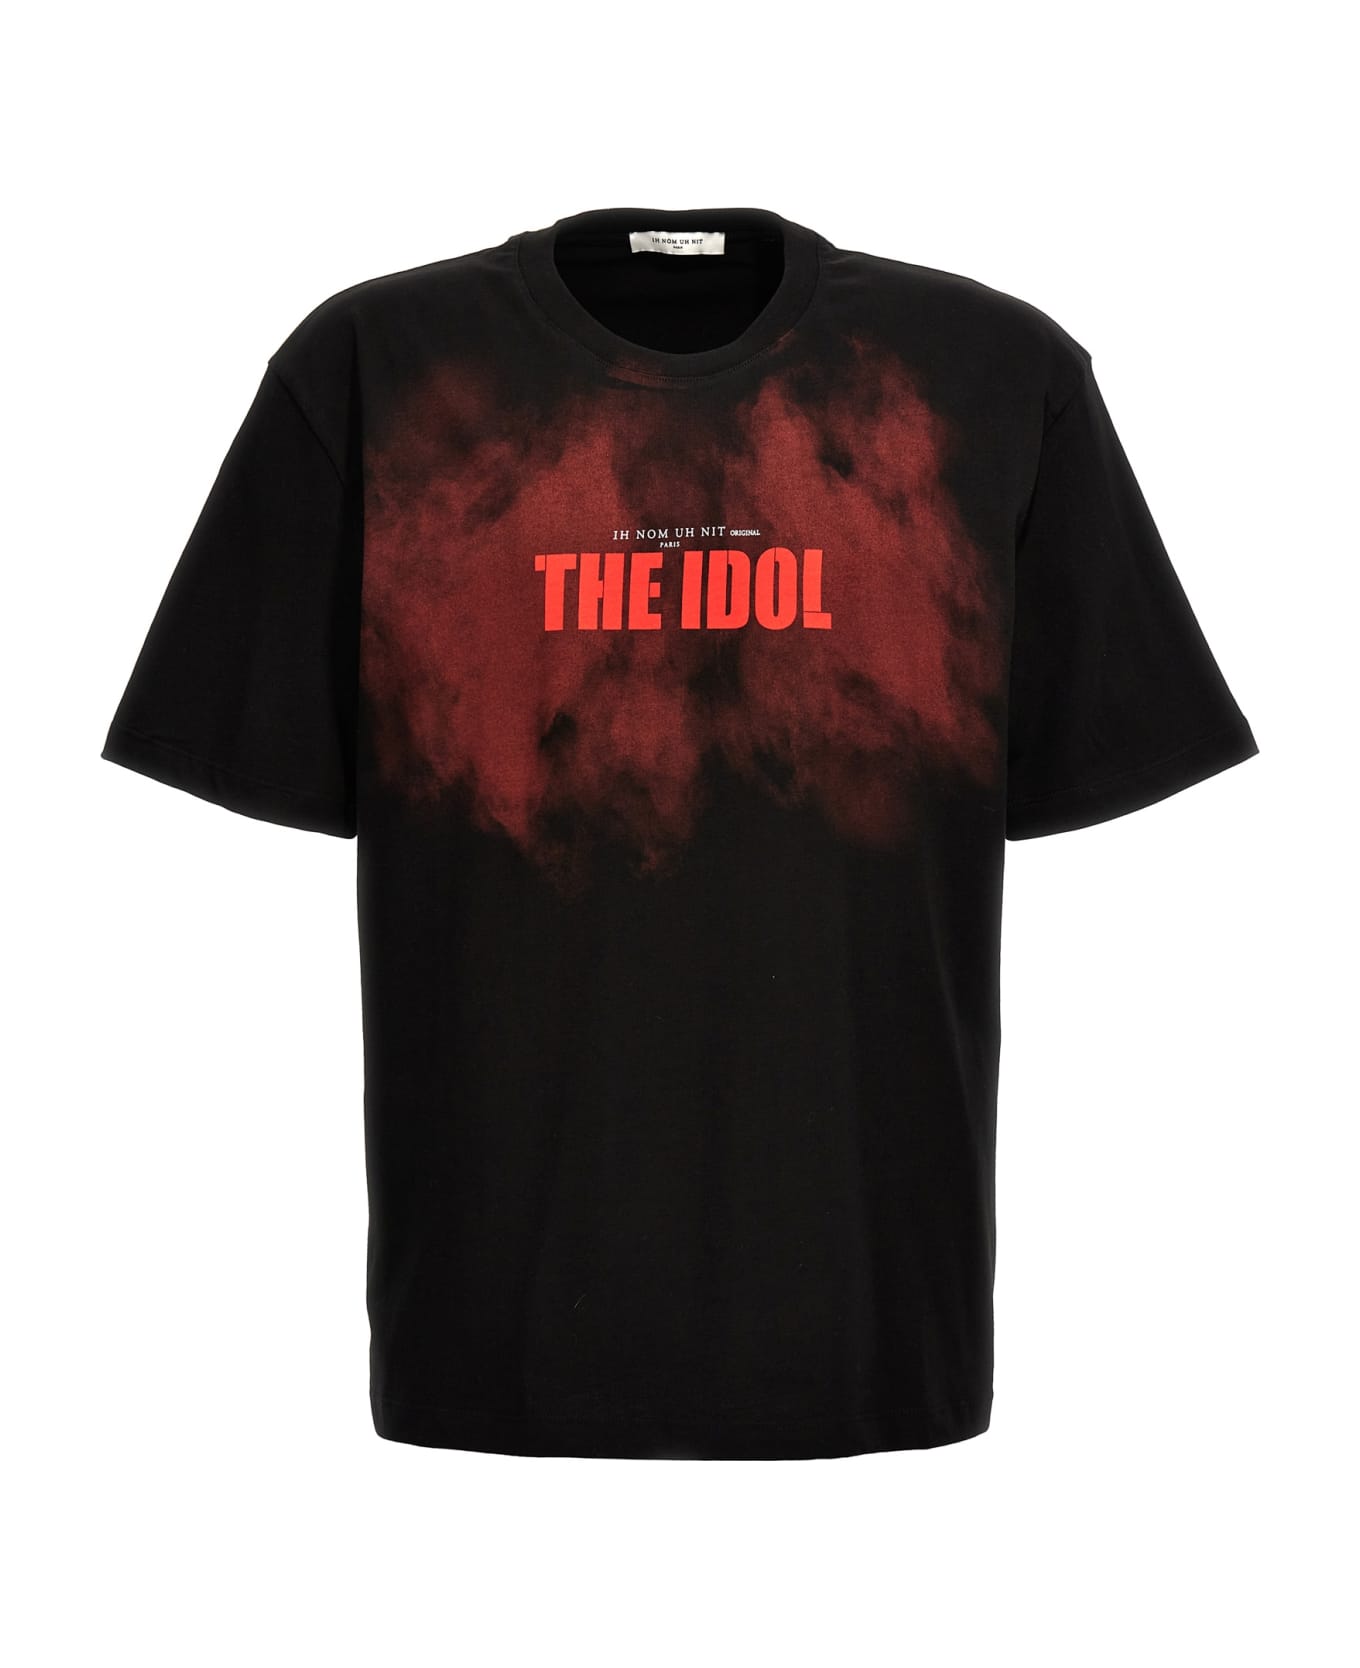 ih nom uh nit 'the Idol' T-shirt - Black   シャツ